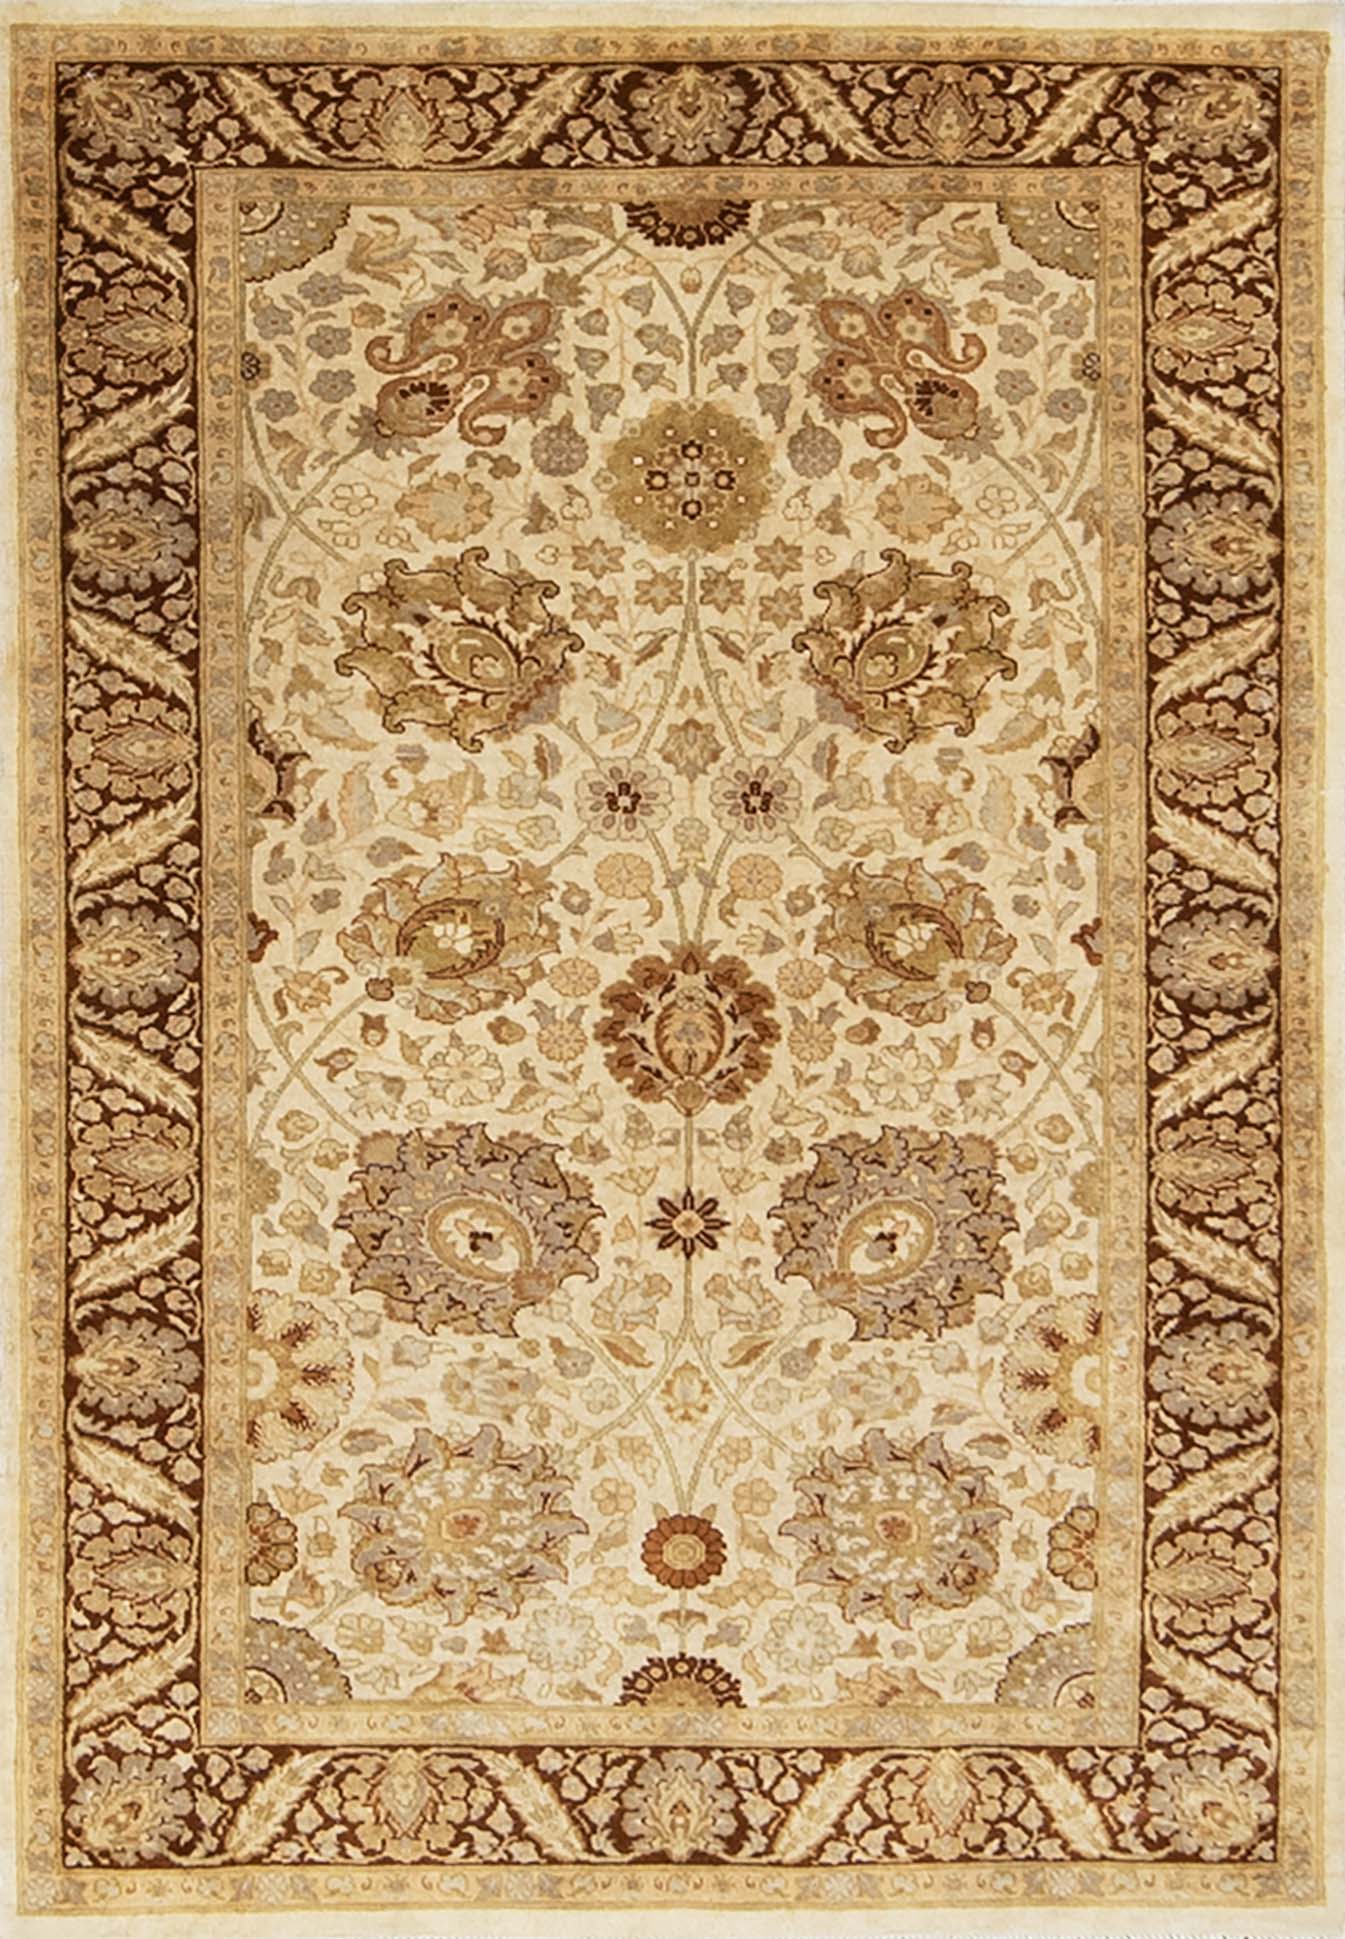 3x5 oriental rug sale. Handmade wool transitional rug in pastel beige and chestnut colors.